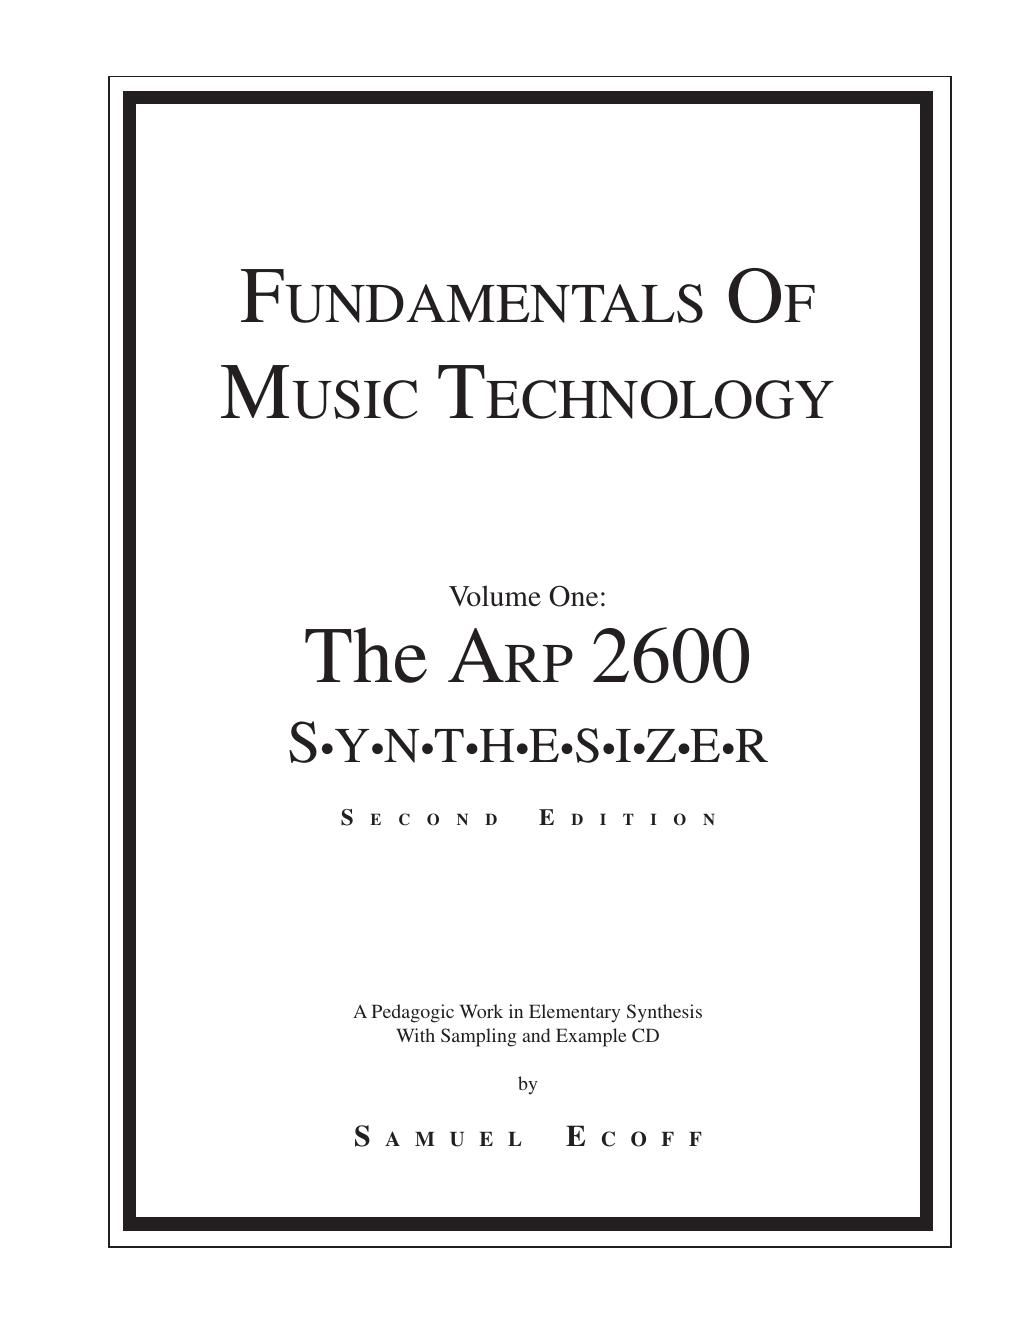 arp 2600 fundamentals of music technology